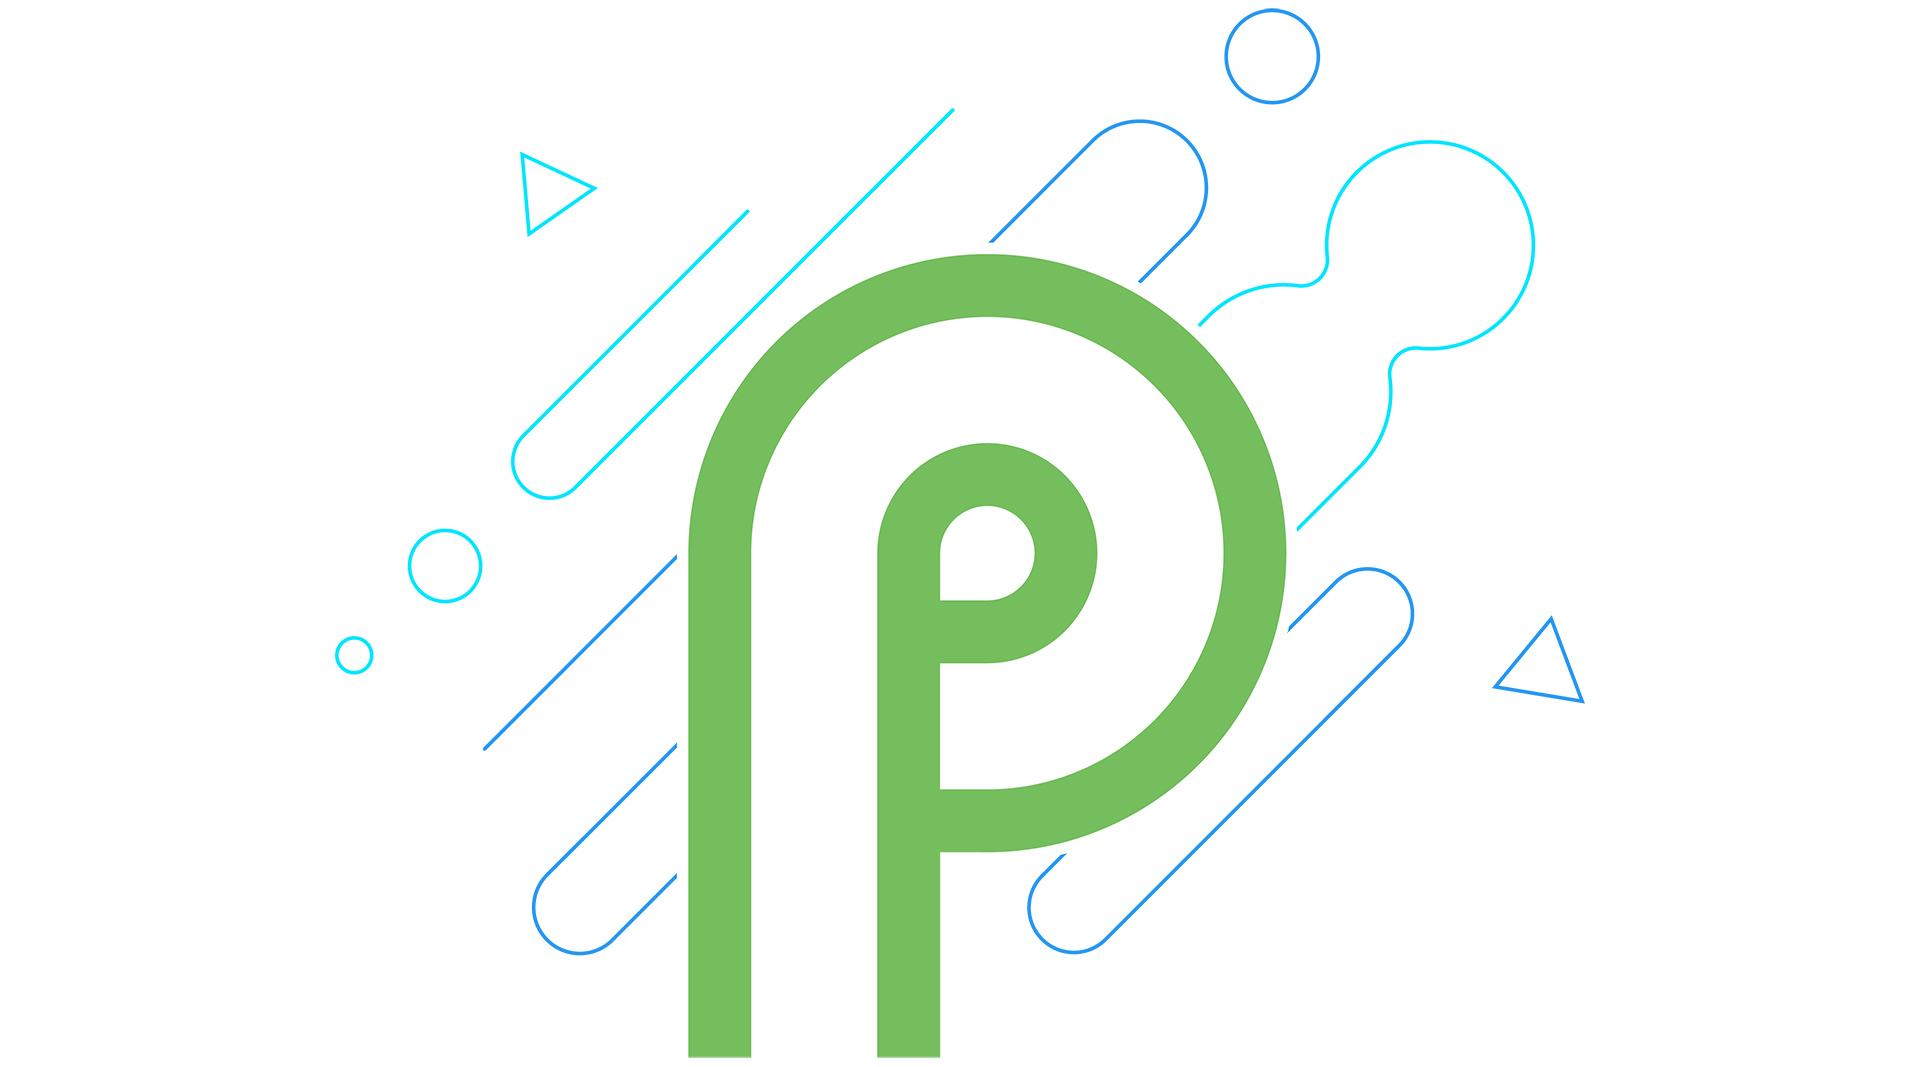 Android P logo fixed